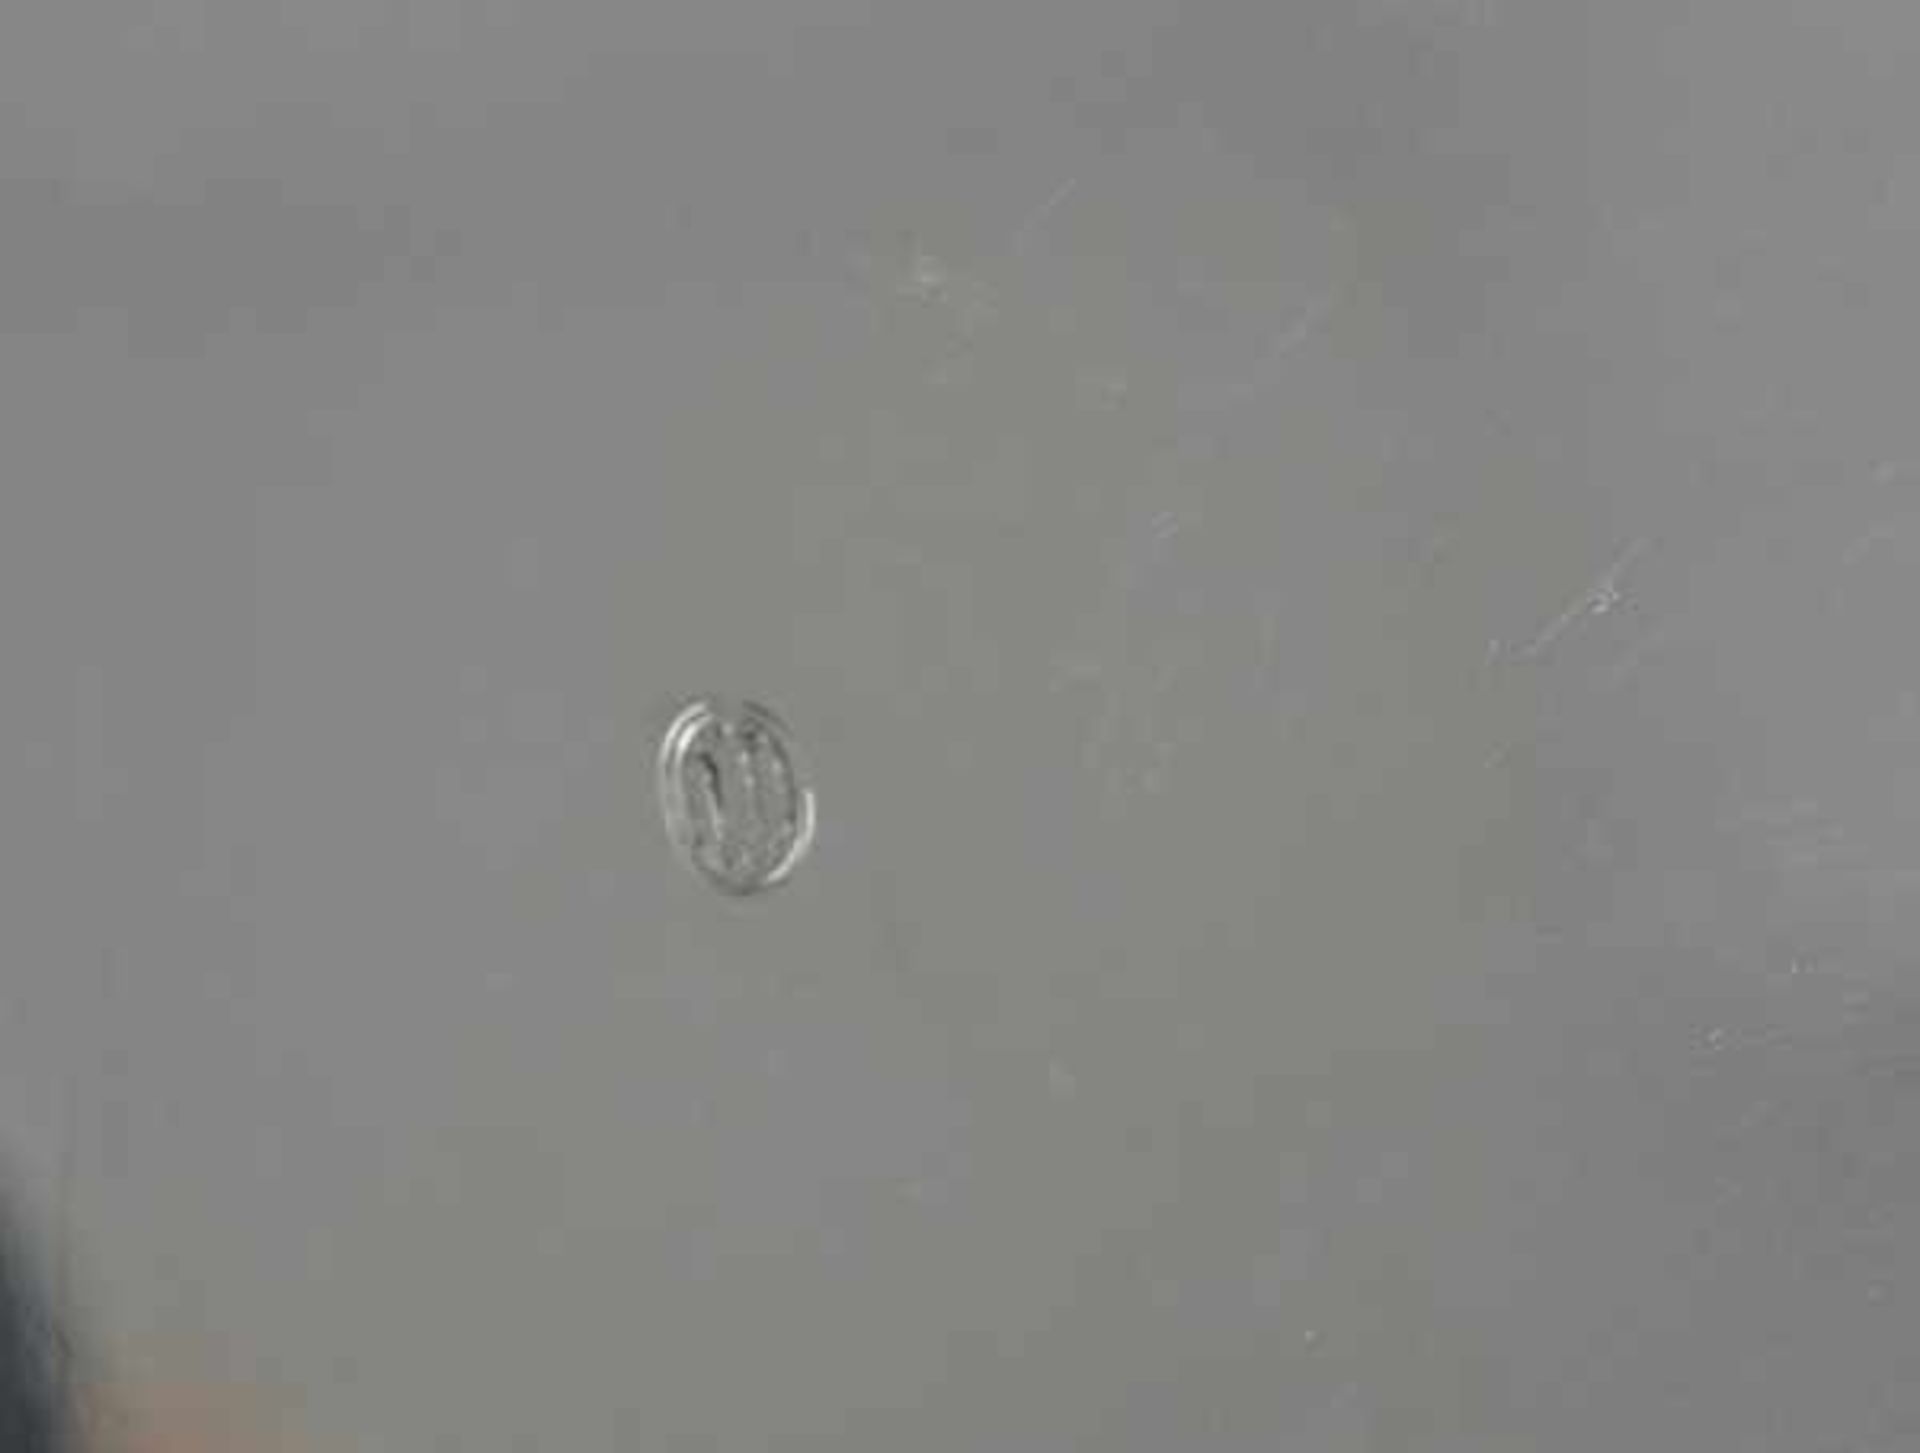 GROSSER TELLER mehrpassiger getreppter Rand, Dänemark, D 35cm, Silber, 966gr - Image 2 of 2